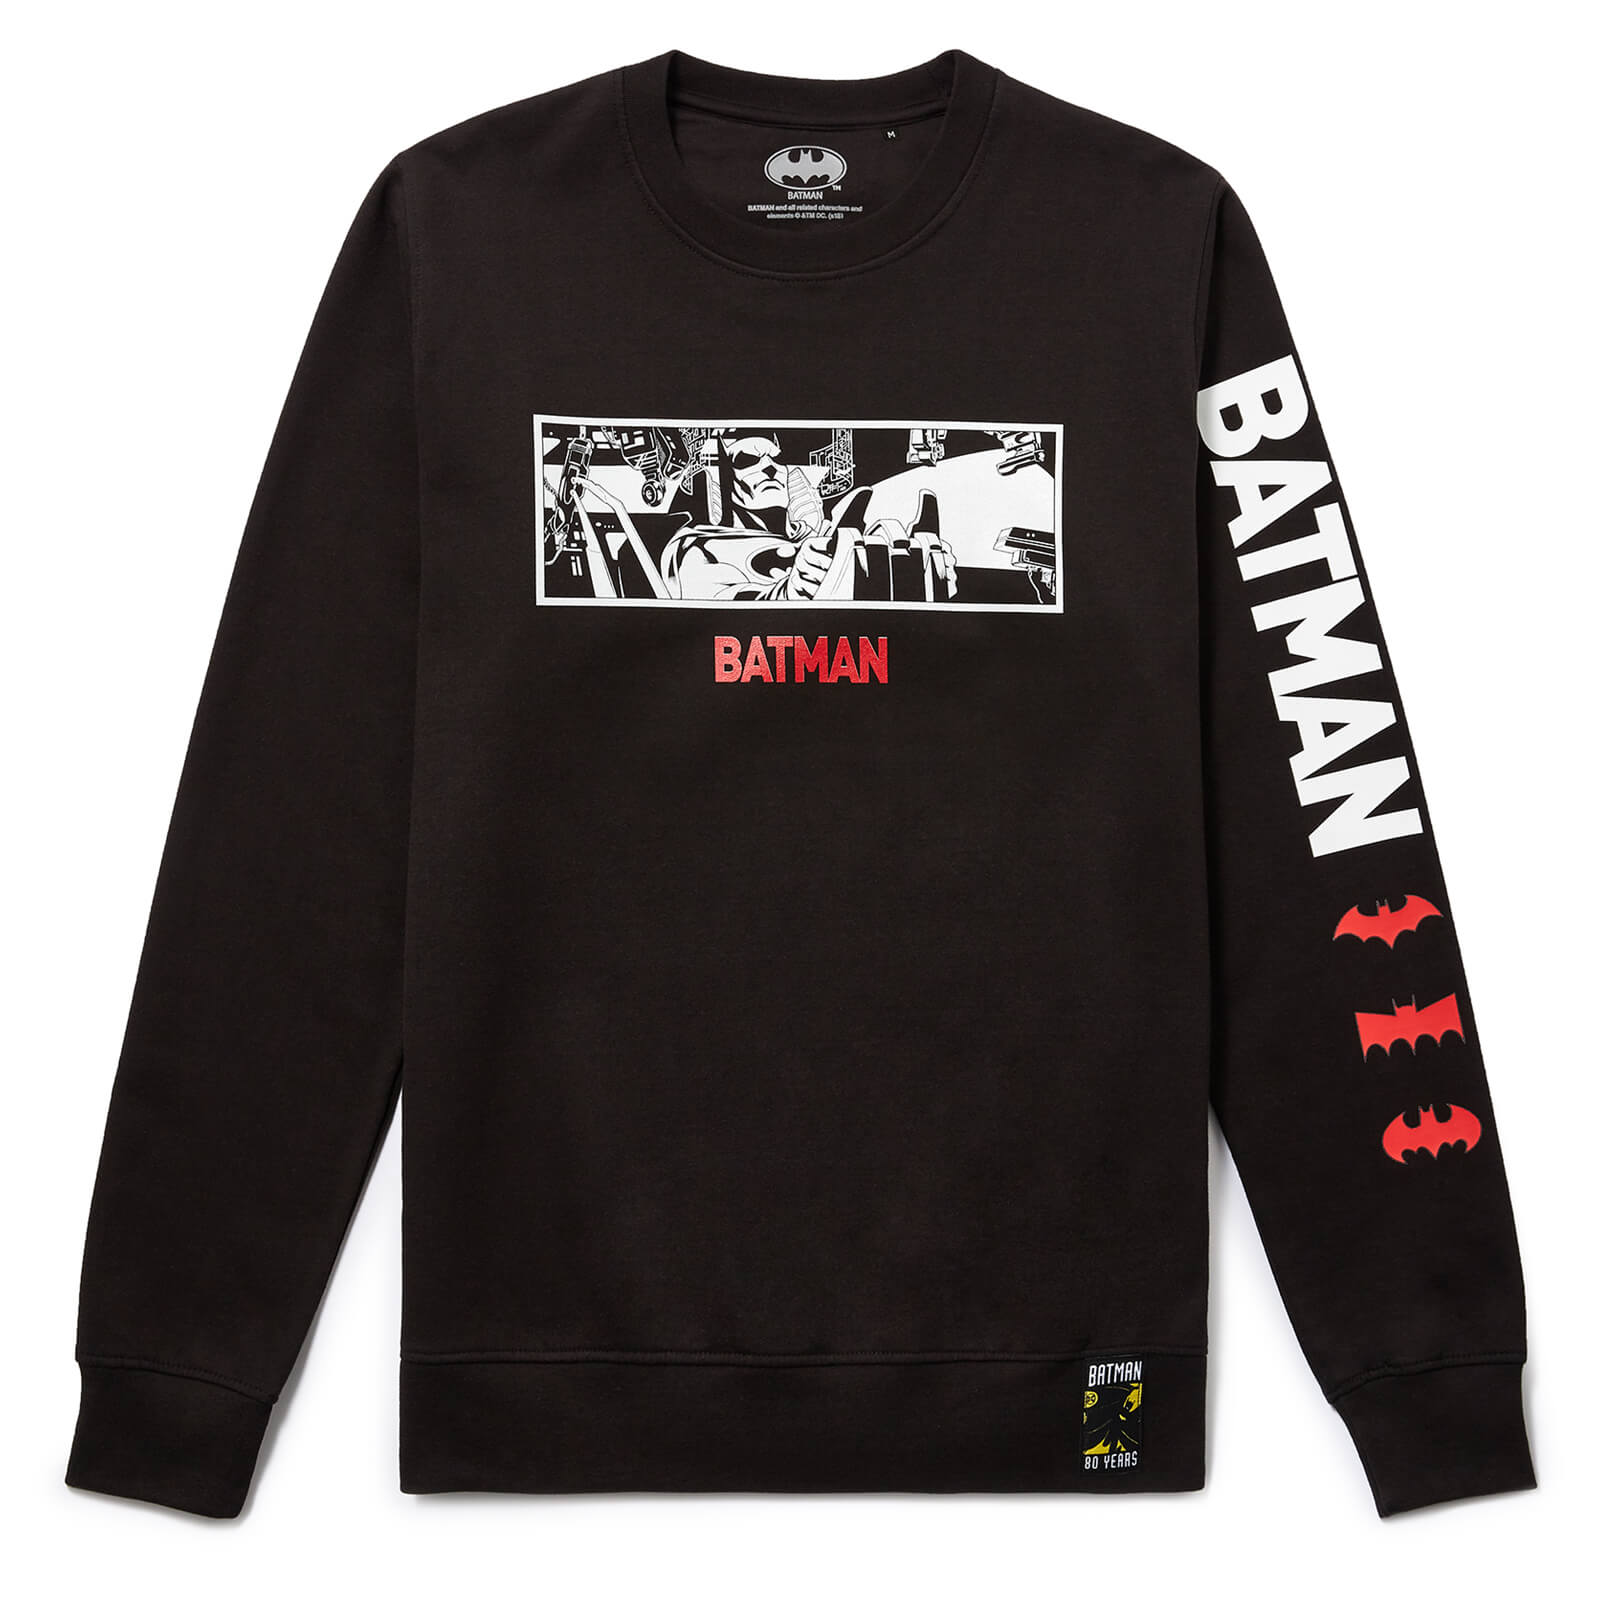 batman 80th anniversary batmobile sweatshirt - black - xxl